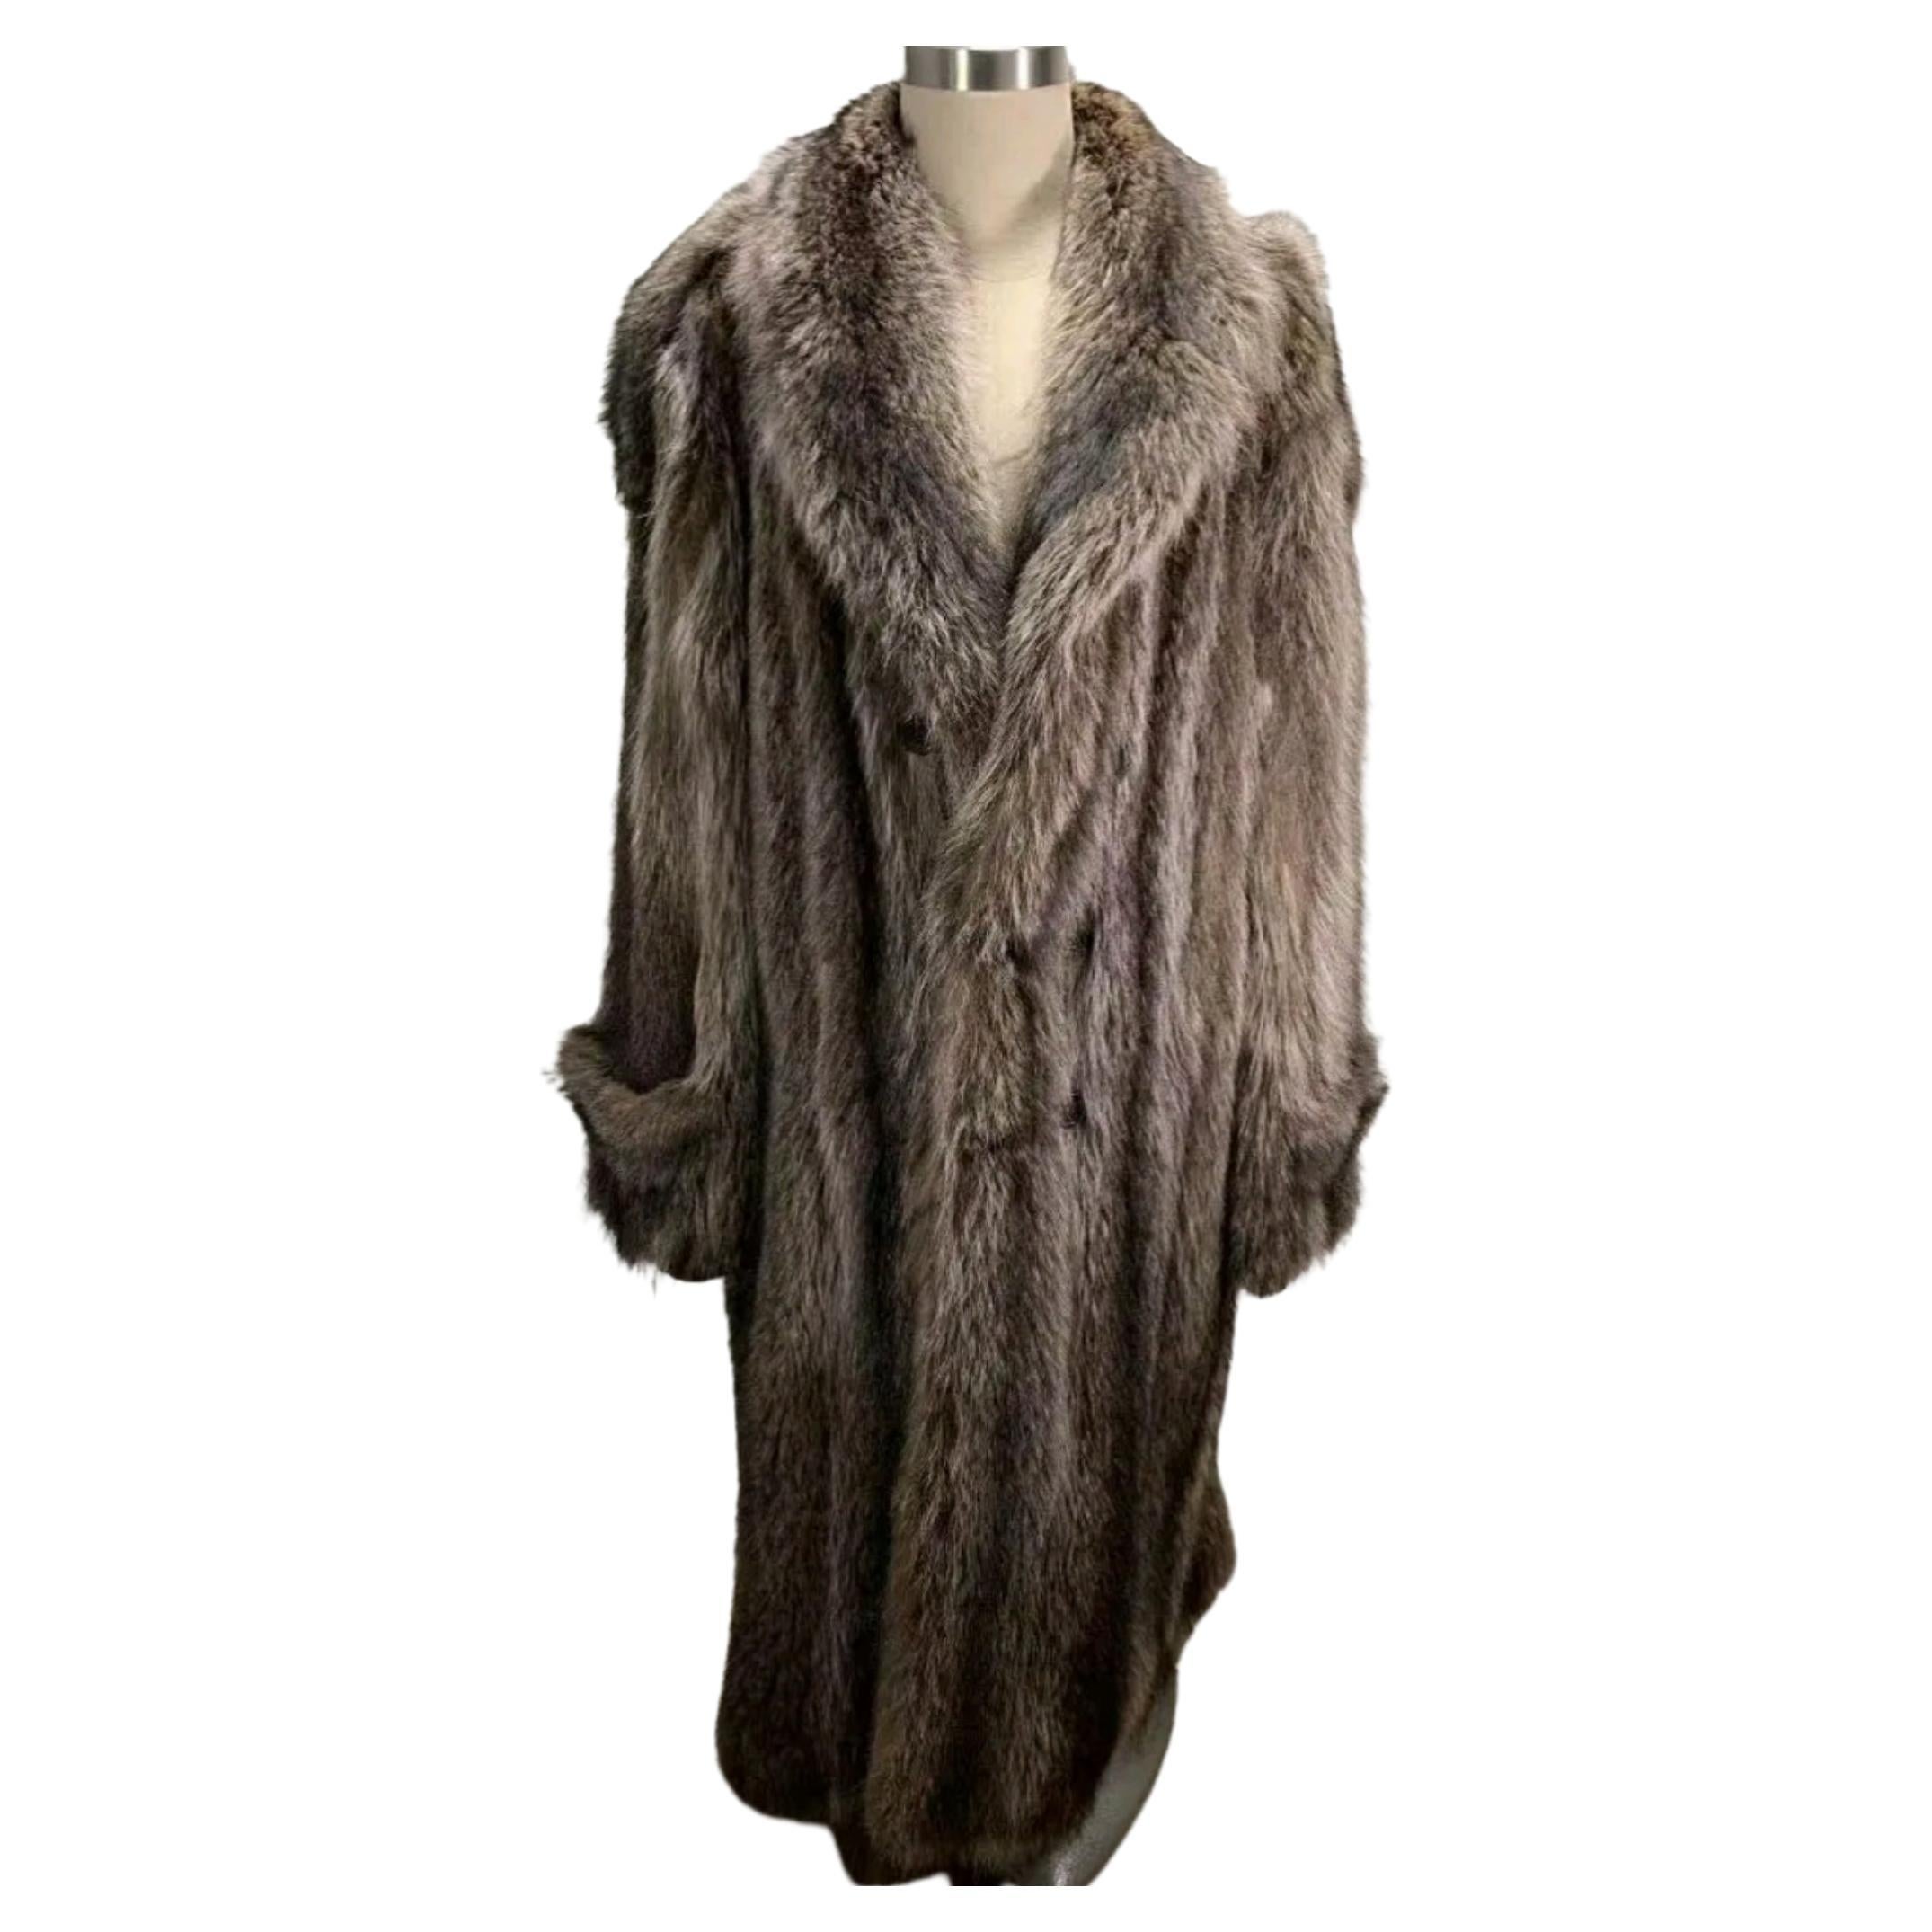 Brand new men's raccoon fur coat size 2 XL For Sale